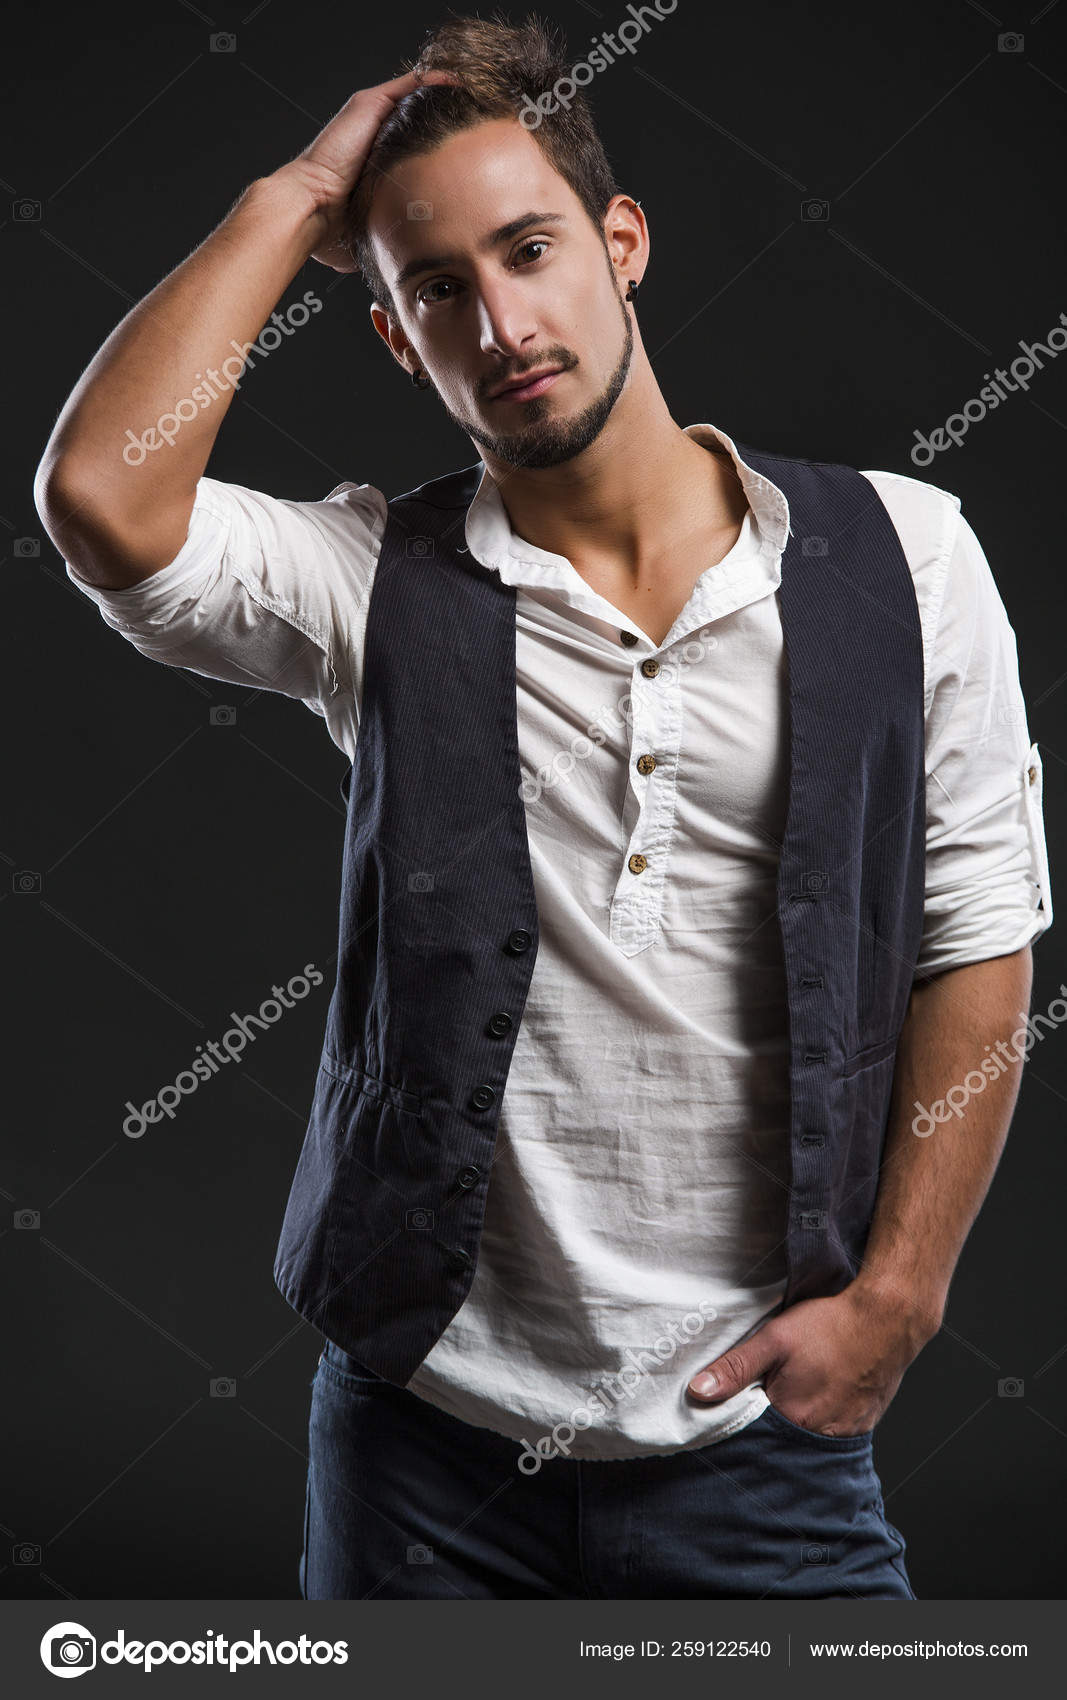 Image result for creative studio male portrait poses | Male portrait poses,  Male portrait, Photography poses for men